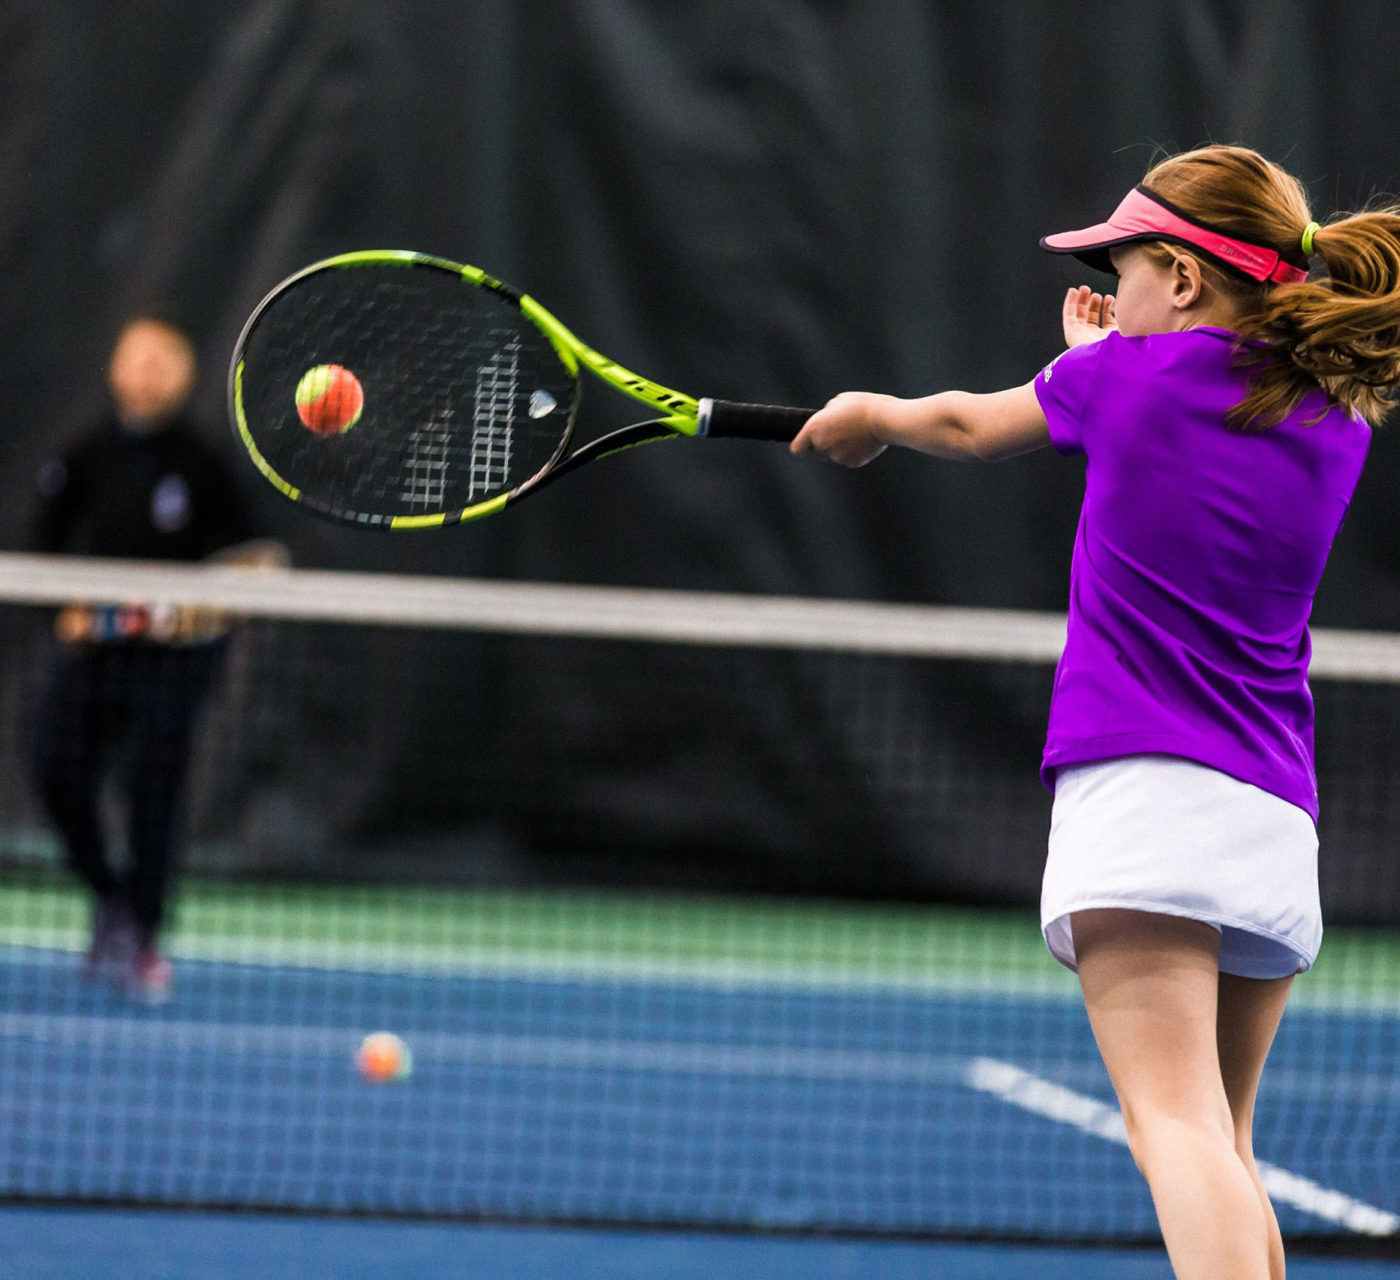 Young girl serving tennis ball